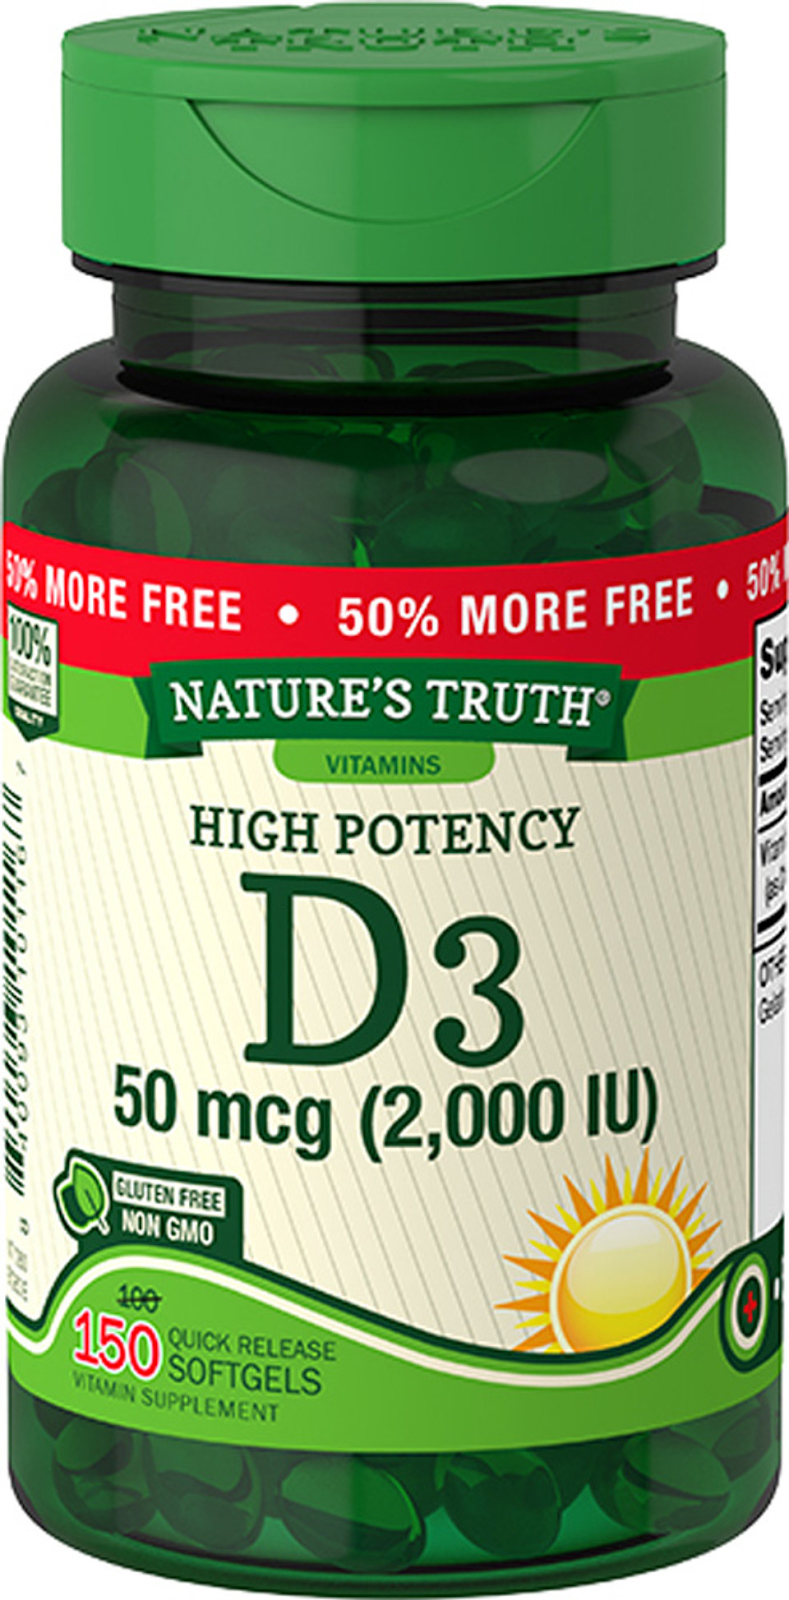 Nature's Truth High Potency Vitamin D3 2000 IU Quick Release Softgels - 150 ct